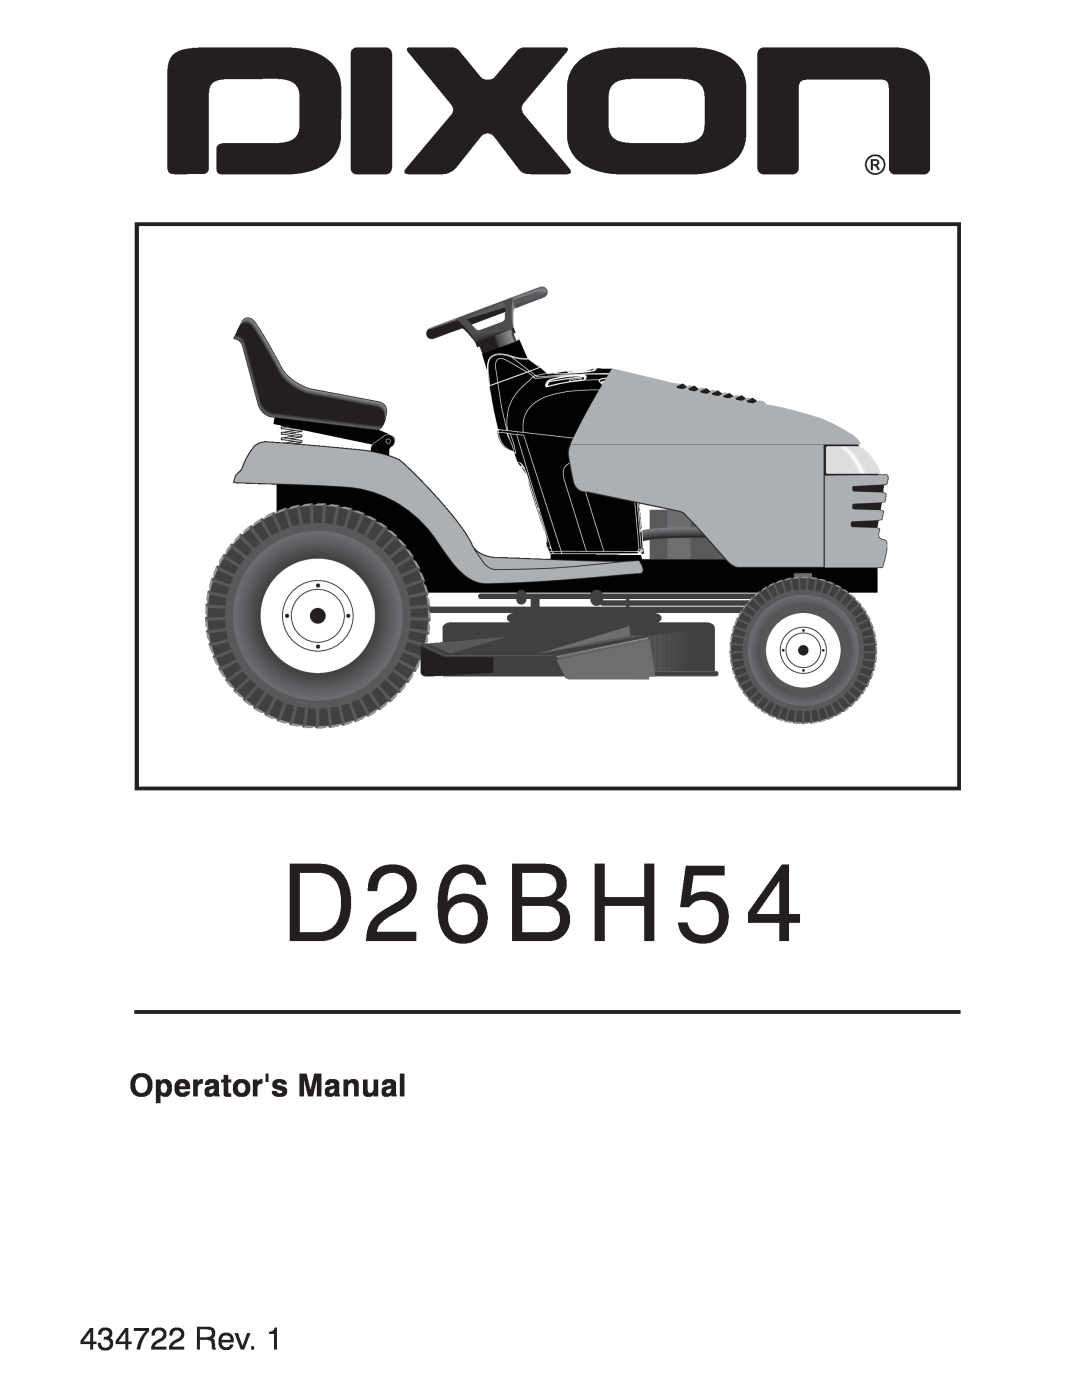 Dixon D26BH54 manual Operators Manual, 434722 Rev 